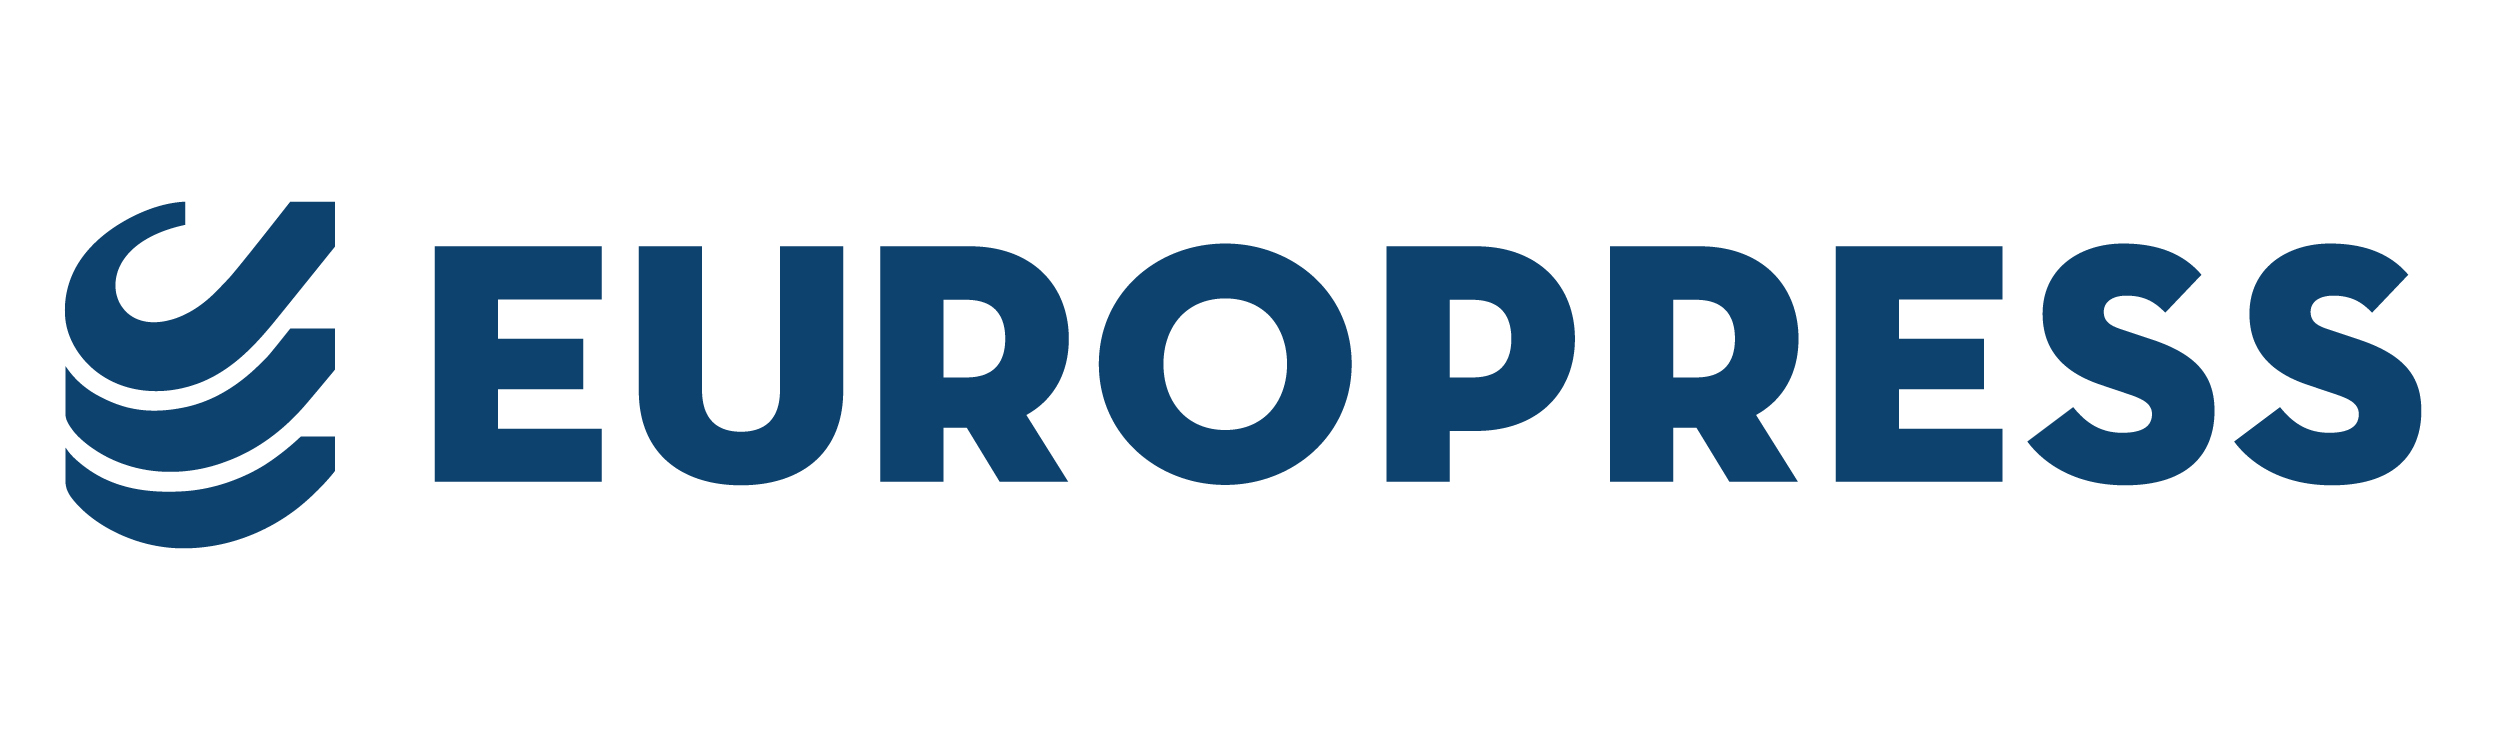 Europress logo